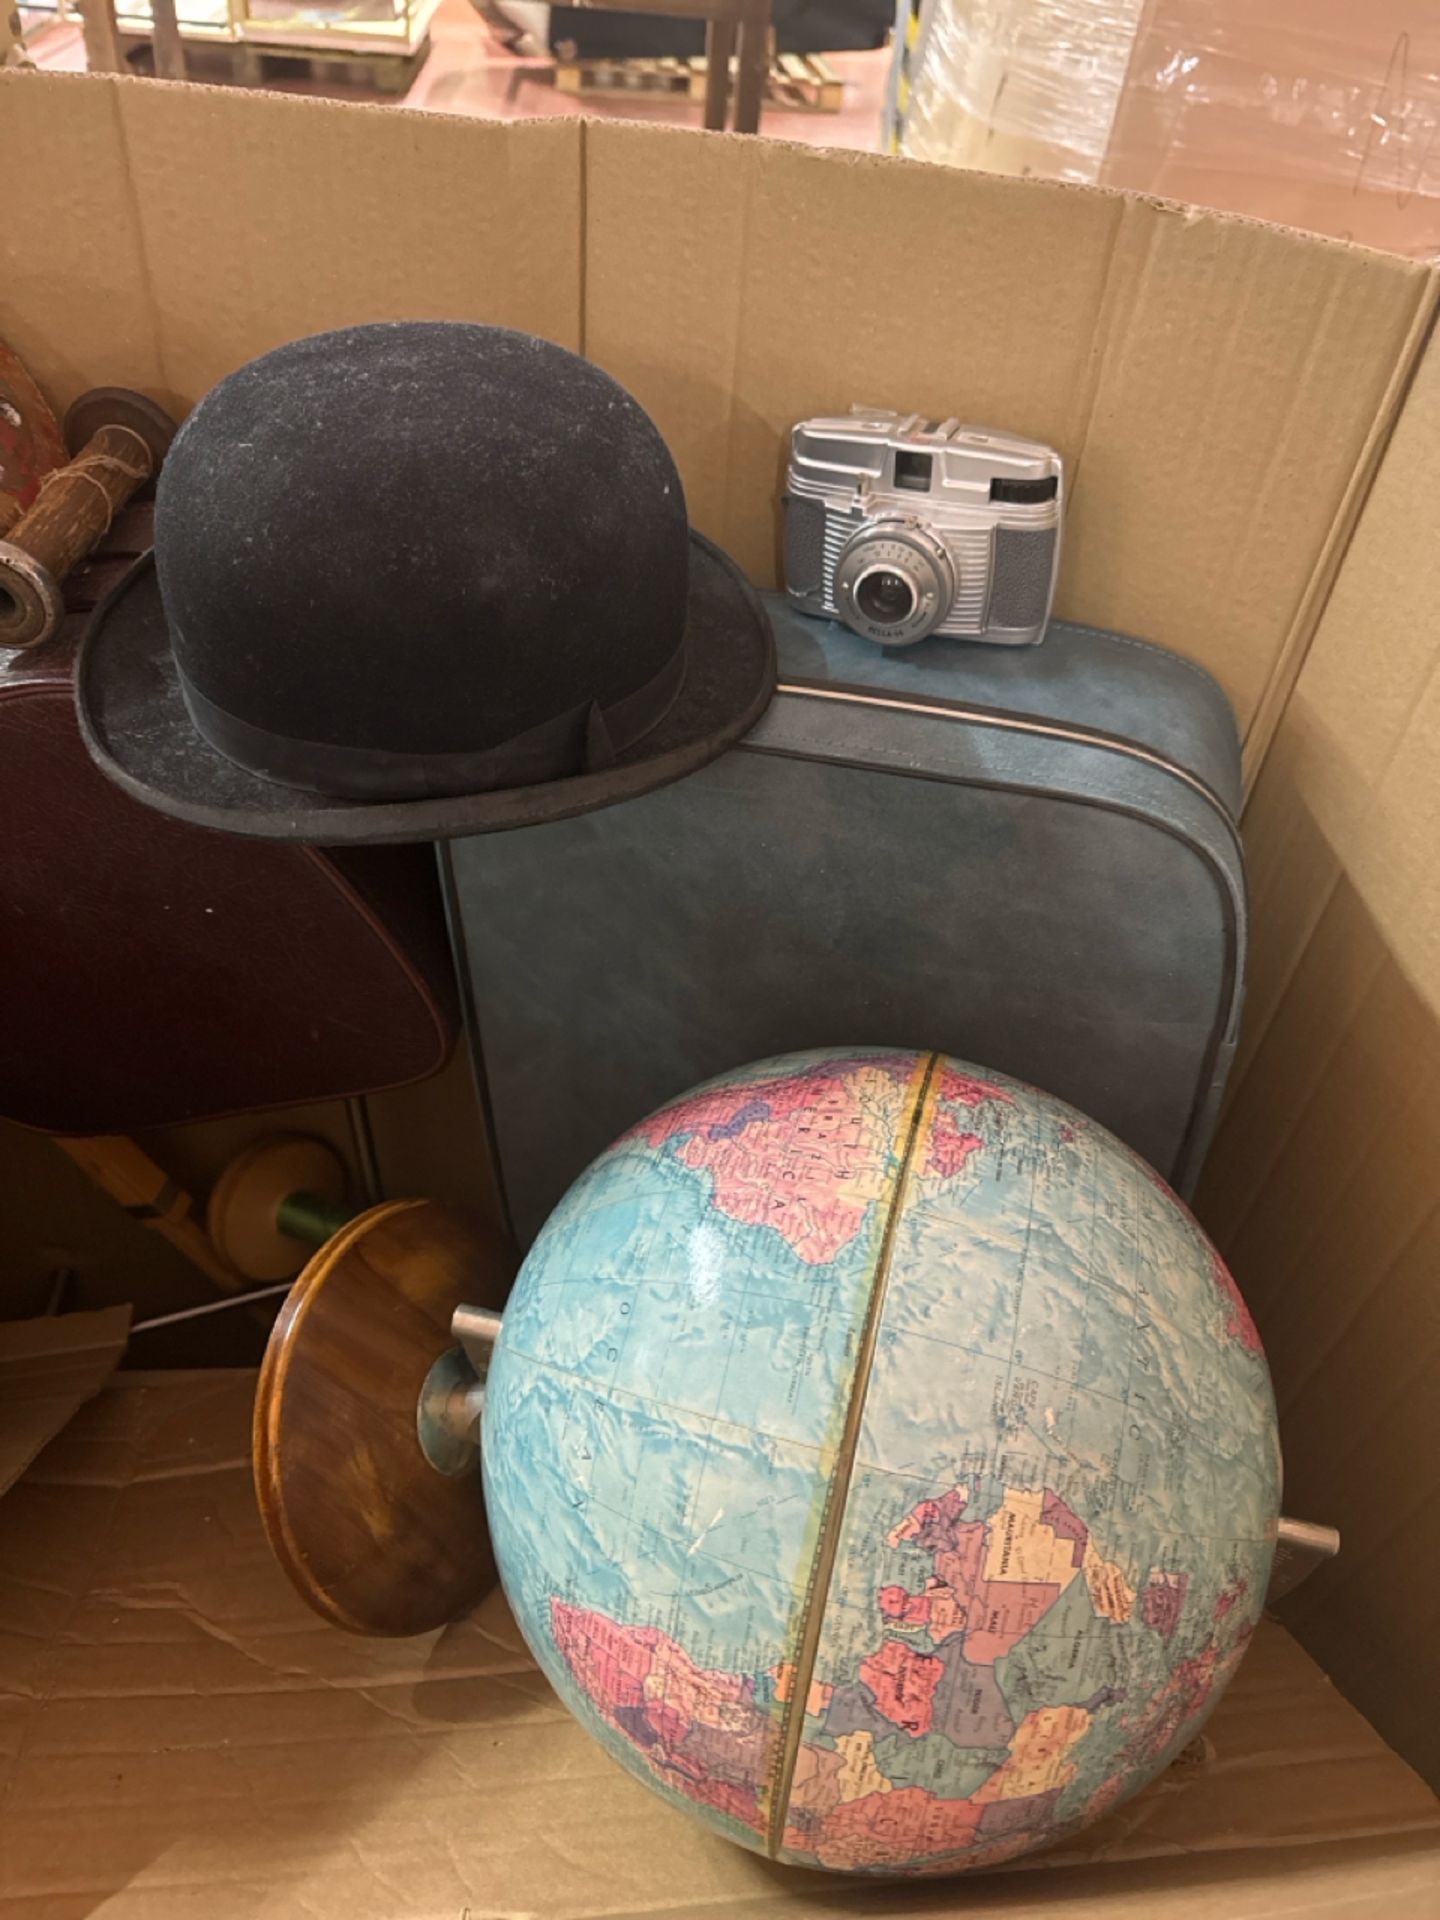 Box of Mixed Display Items - including Vintage Camera, Globe, Camera, Fan, Easel, Roberts Radio - Image 2 of 5